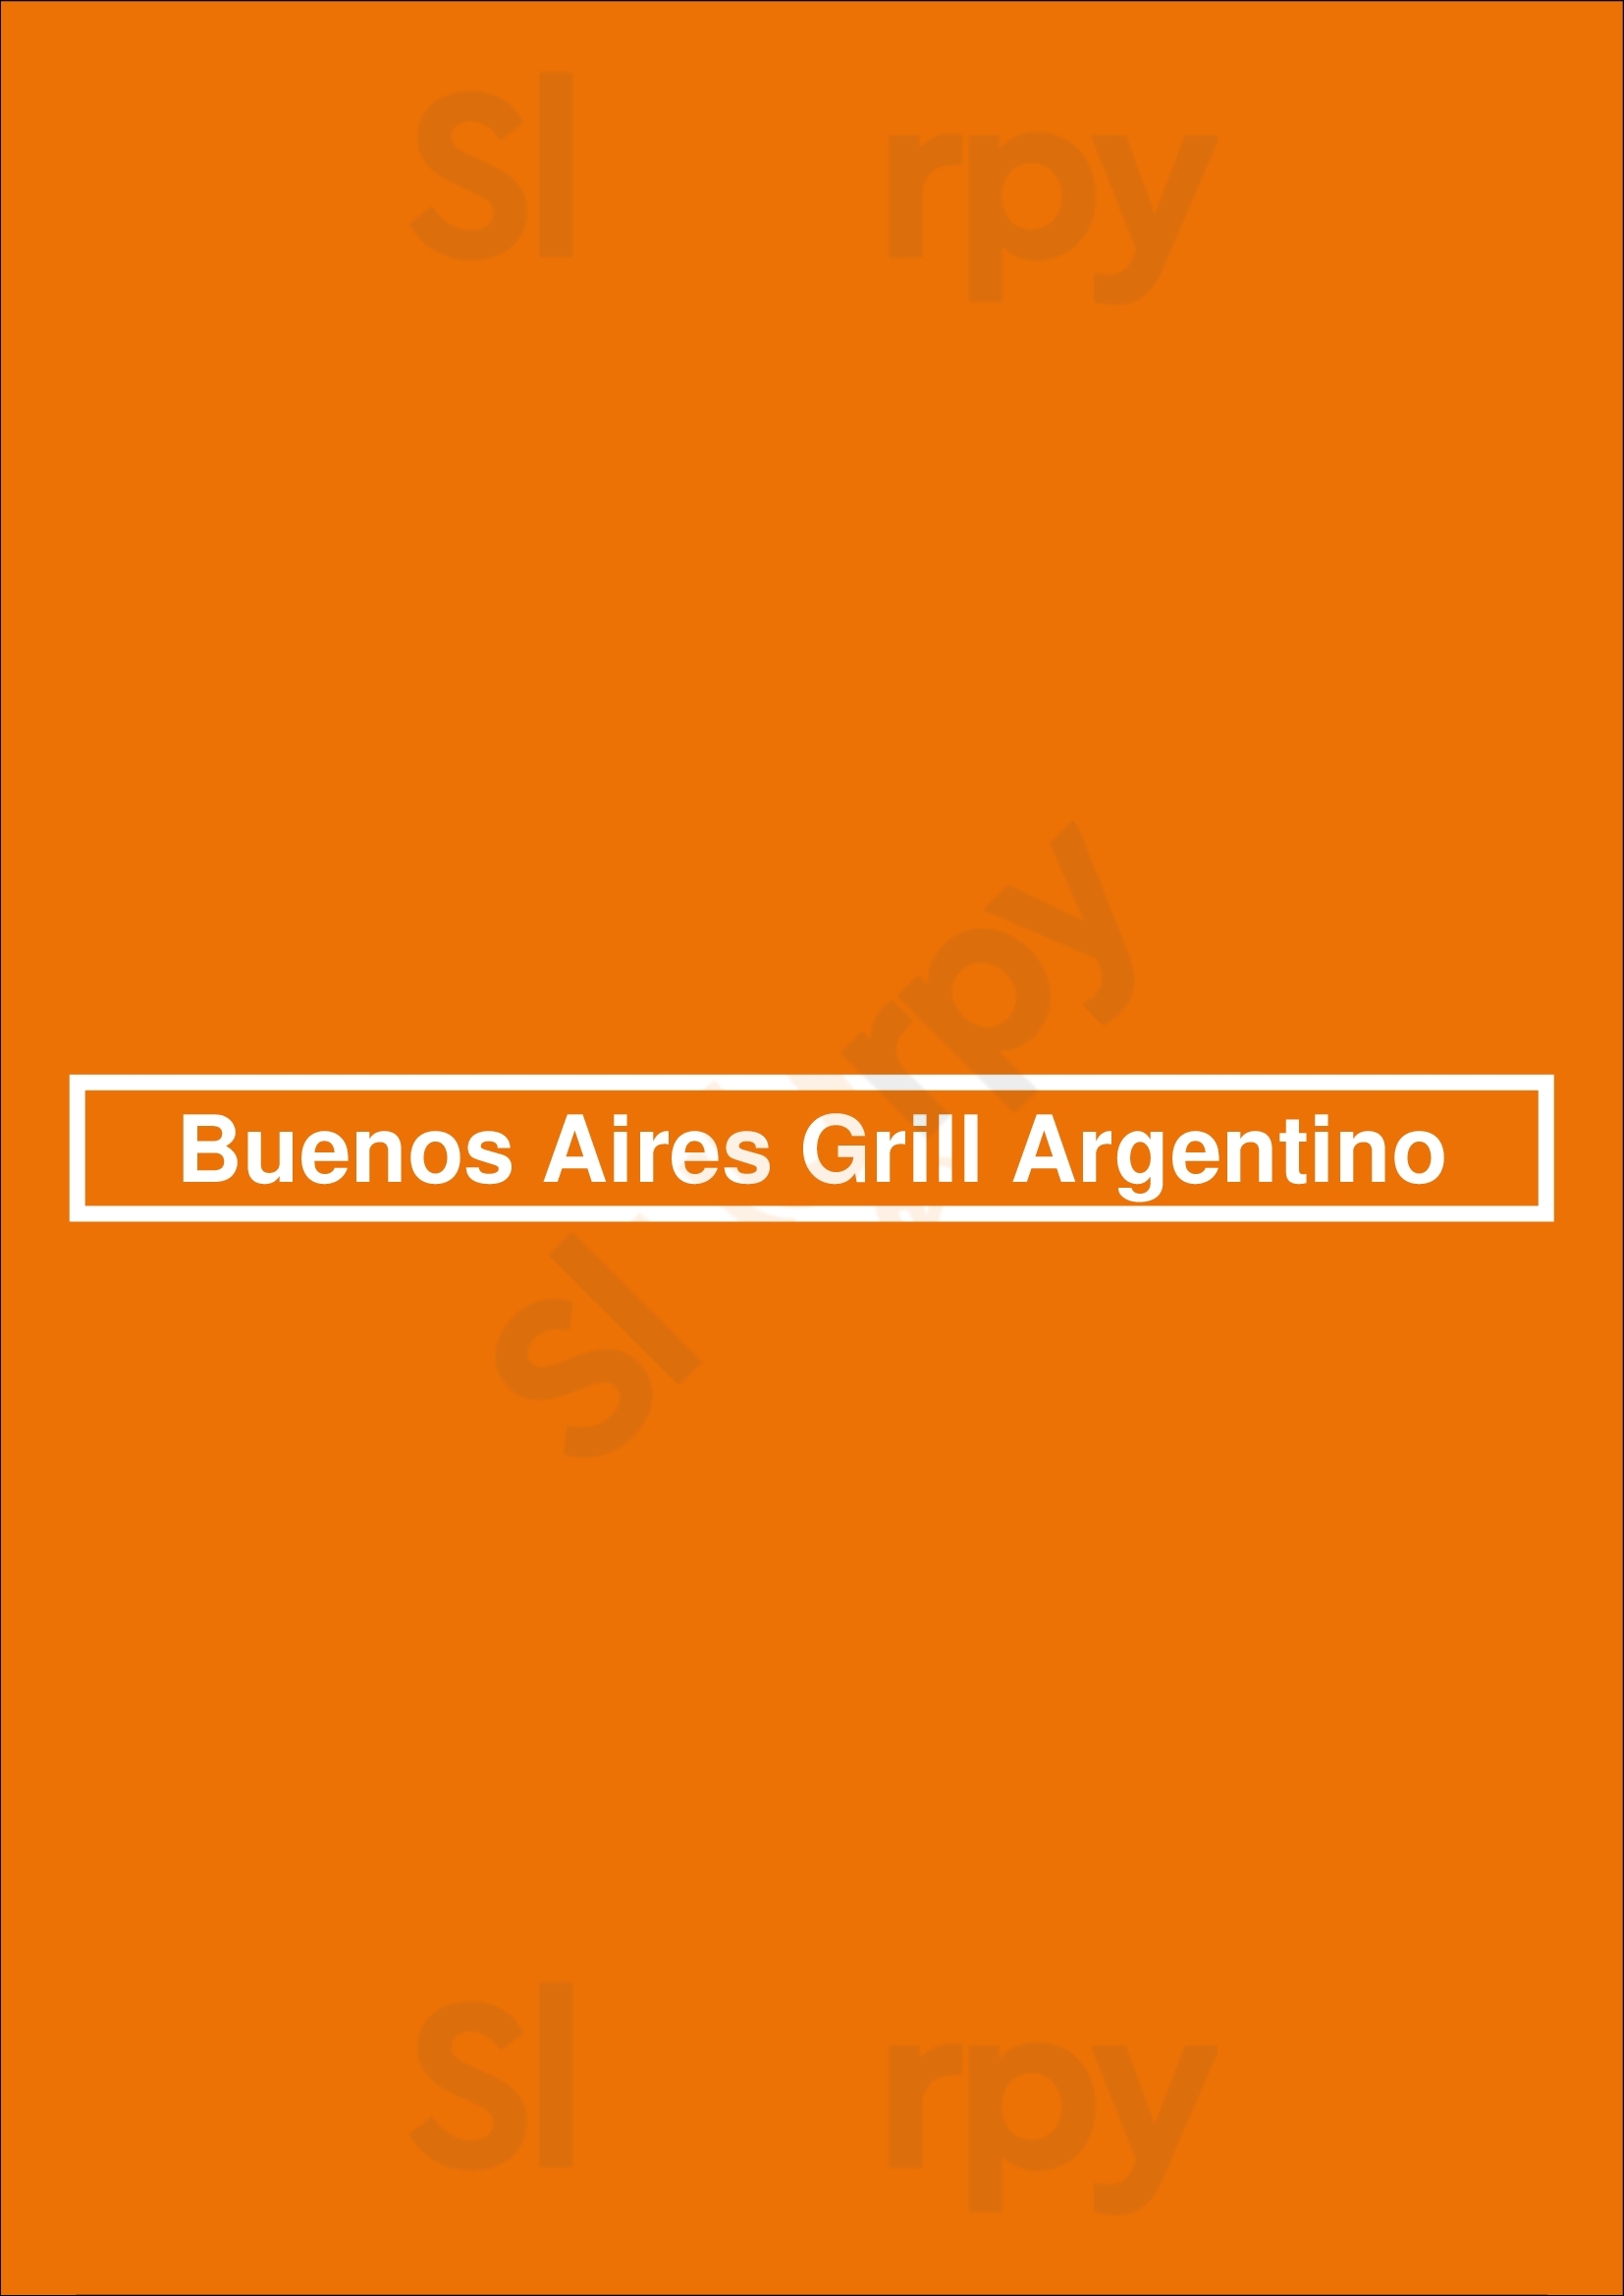 Buenos Aires Grill Argentino Playa Blanca Menu - 1